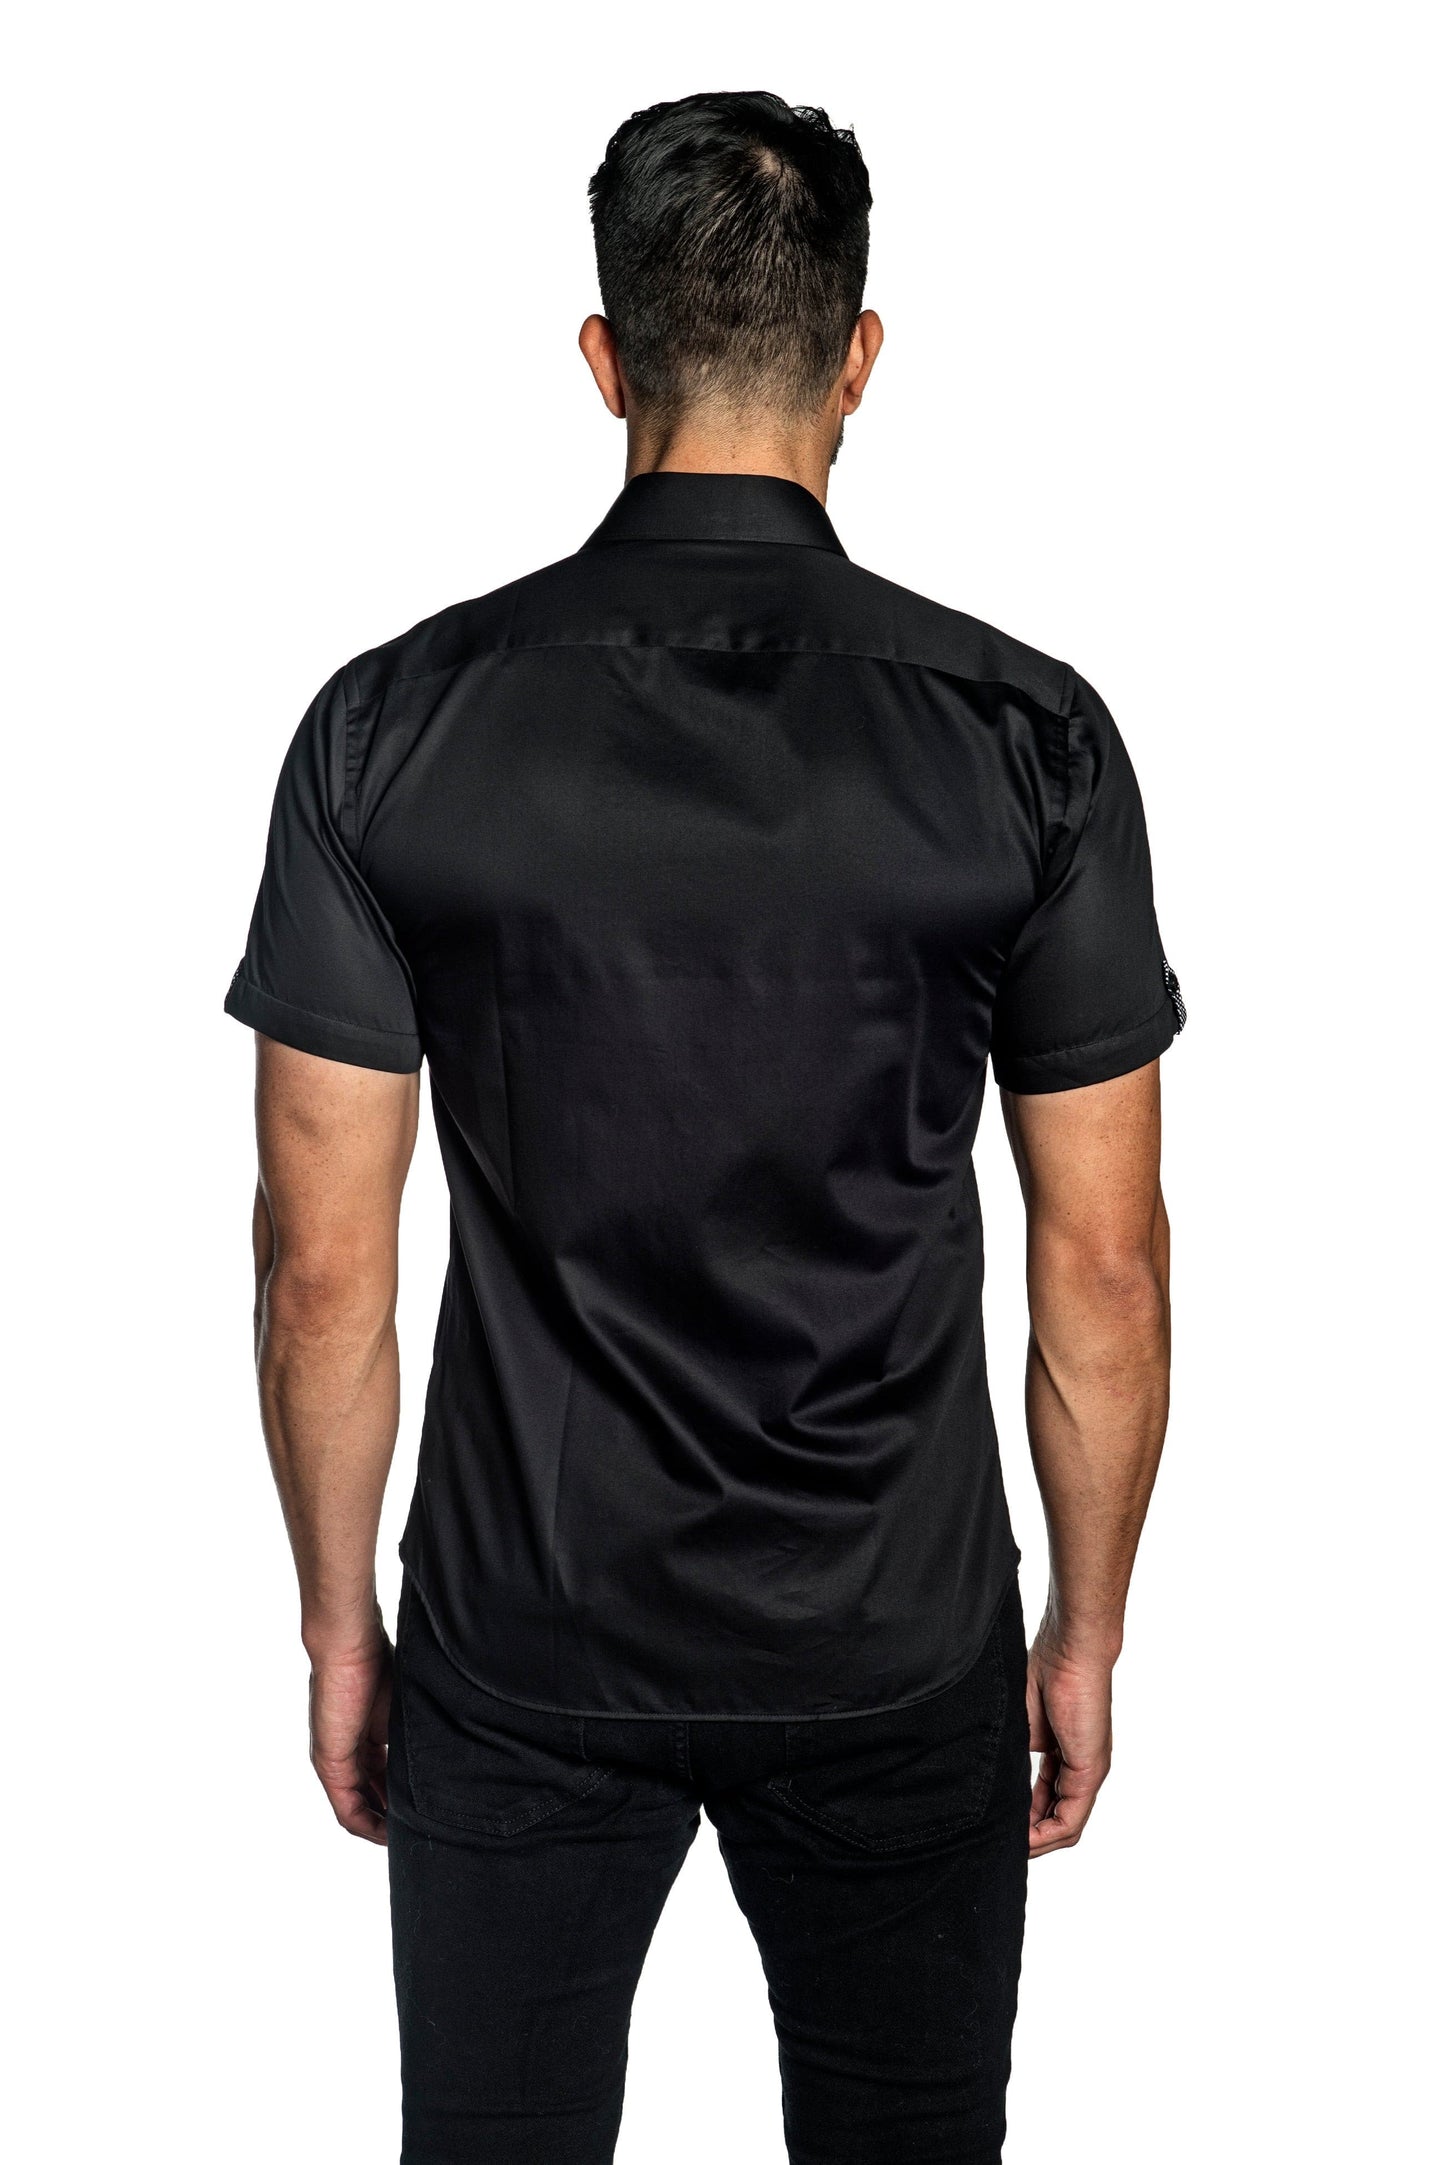 Black Short Sleeve Shirt T-2072SS - Back - Jared Lang